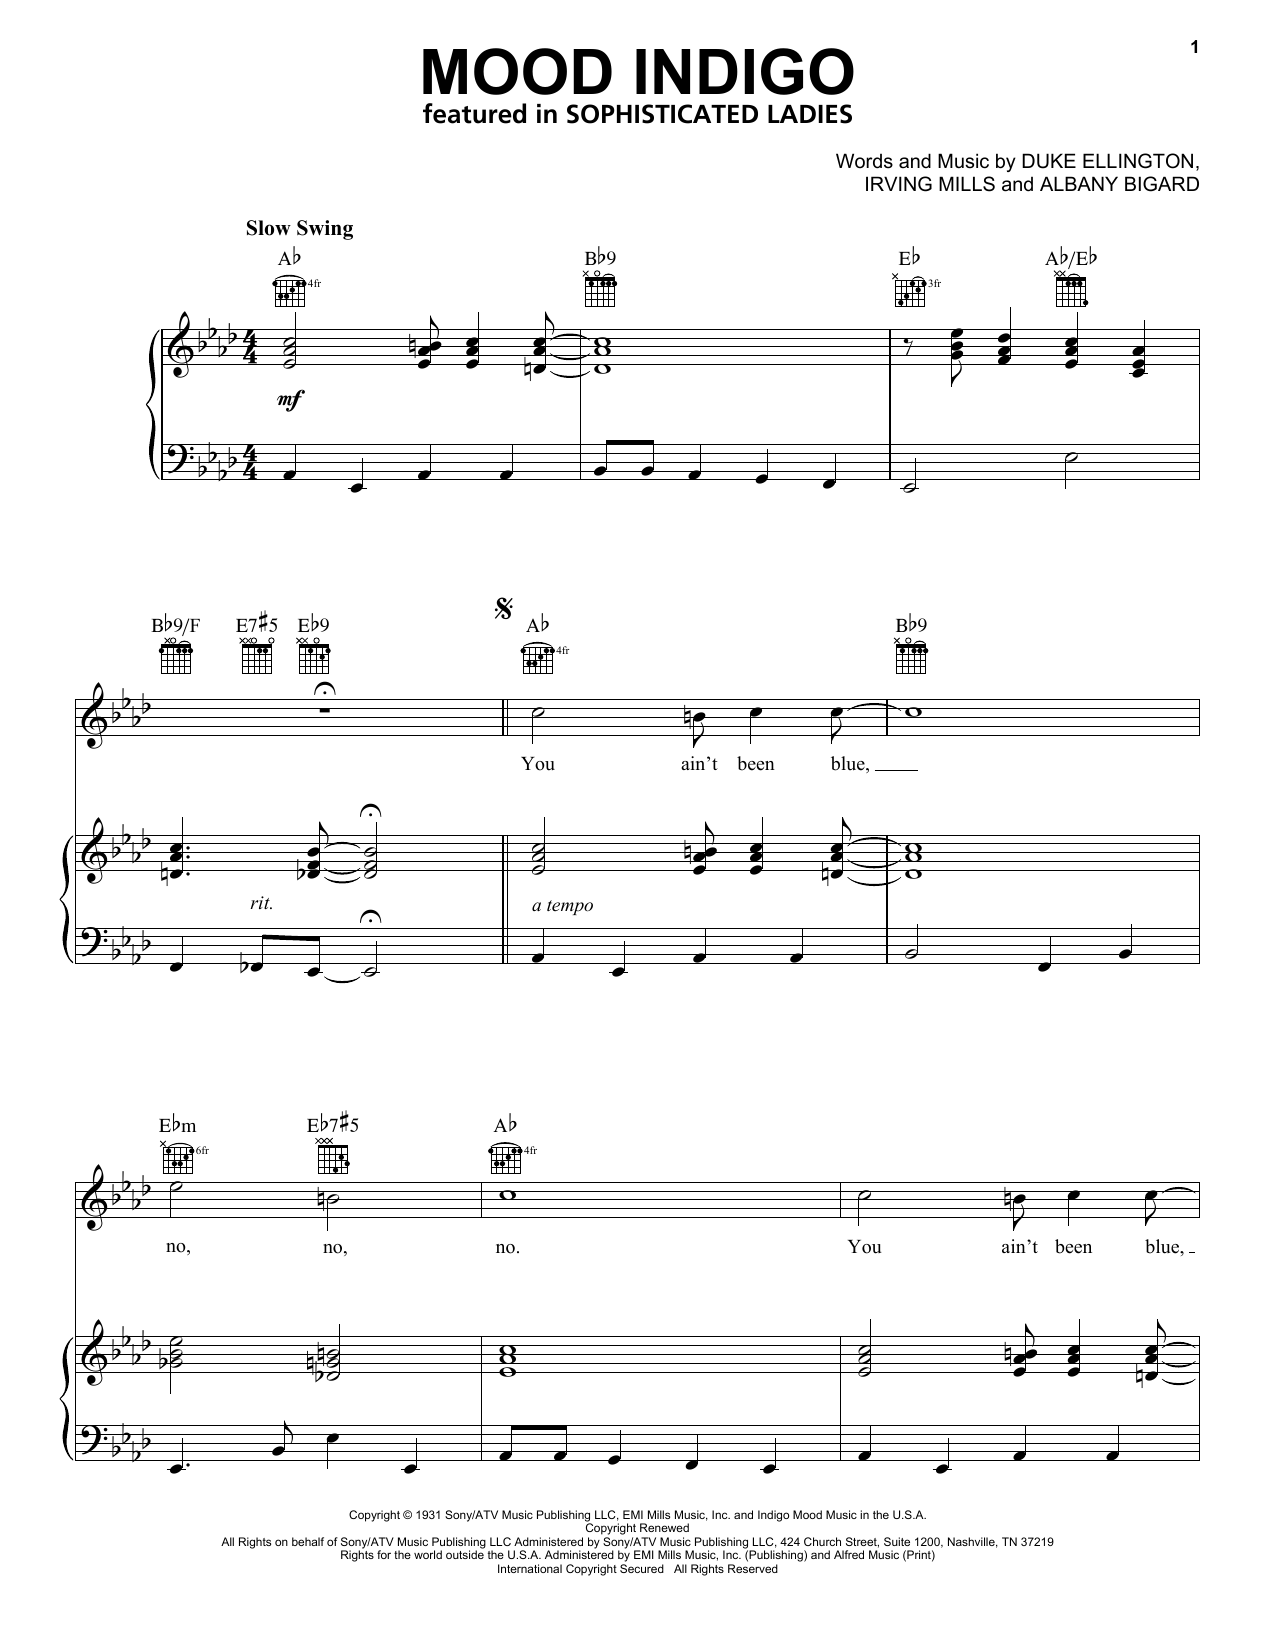 Duke Ellington Mood Indigo Sheet Music Notes & Chords for Real Book – Melody, Lyrics & Chords - Download or Print PDF